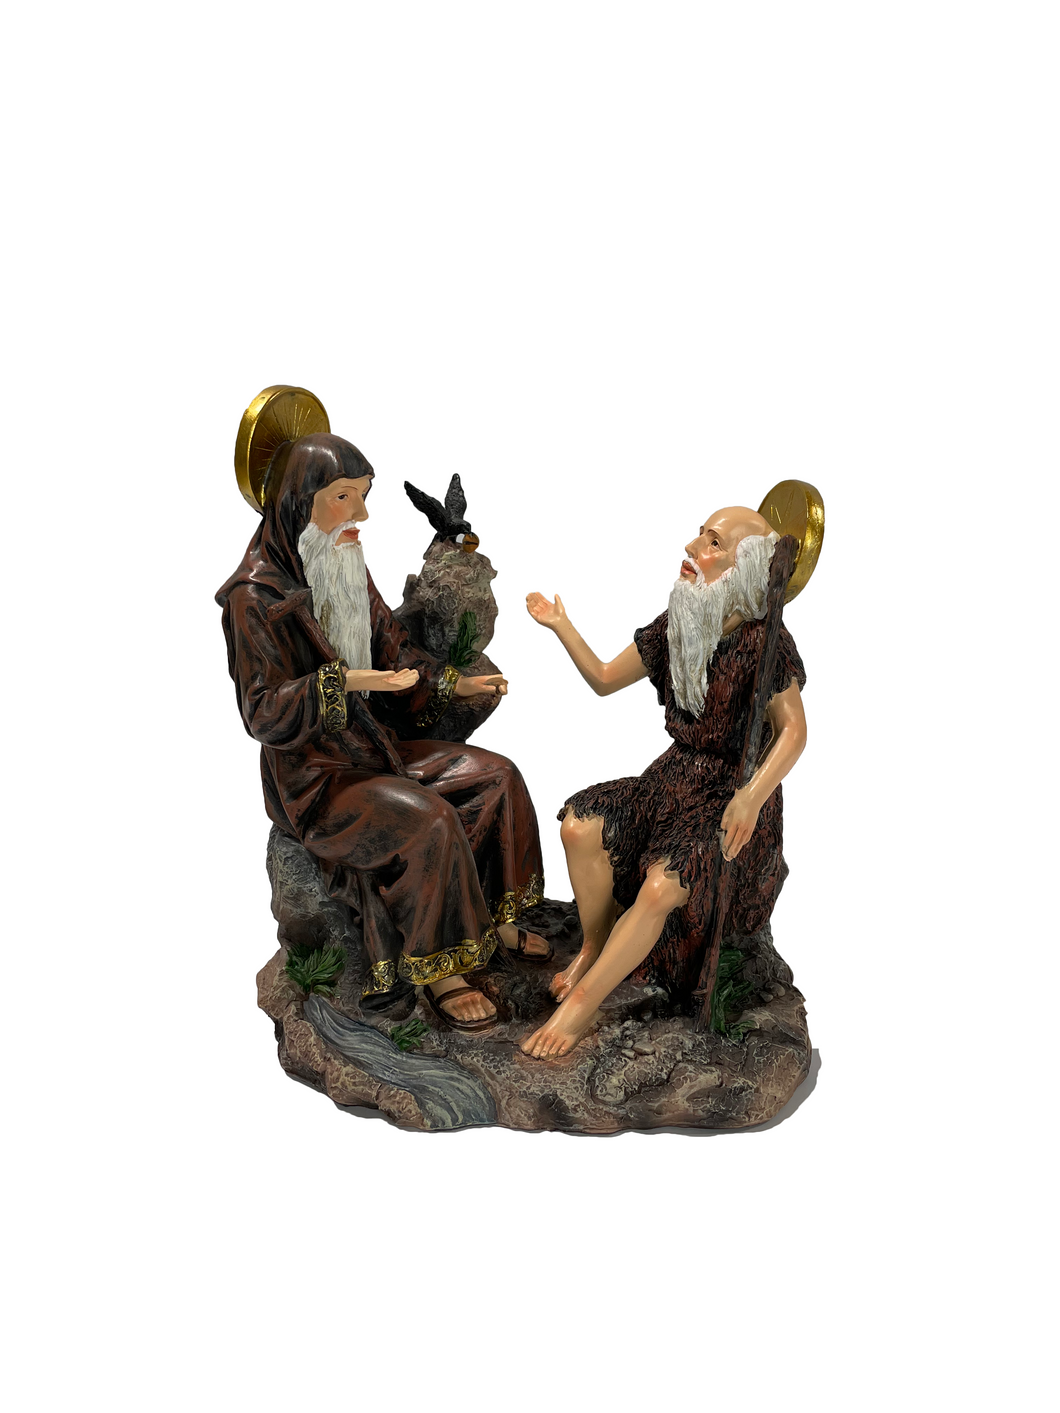 Saint Anthony and Paul